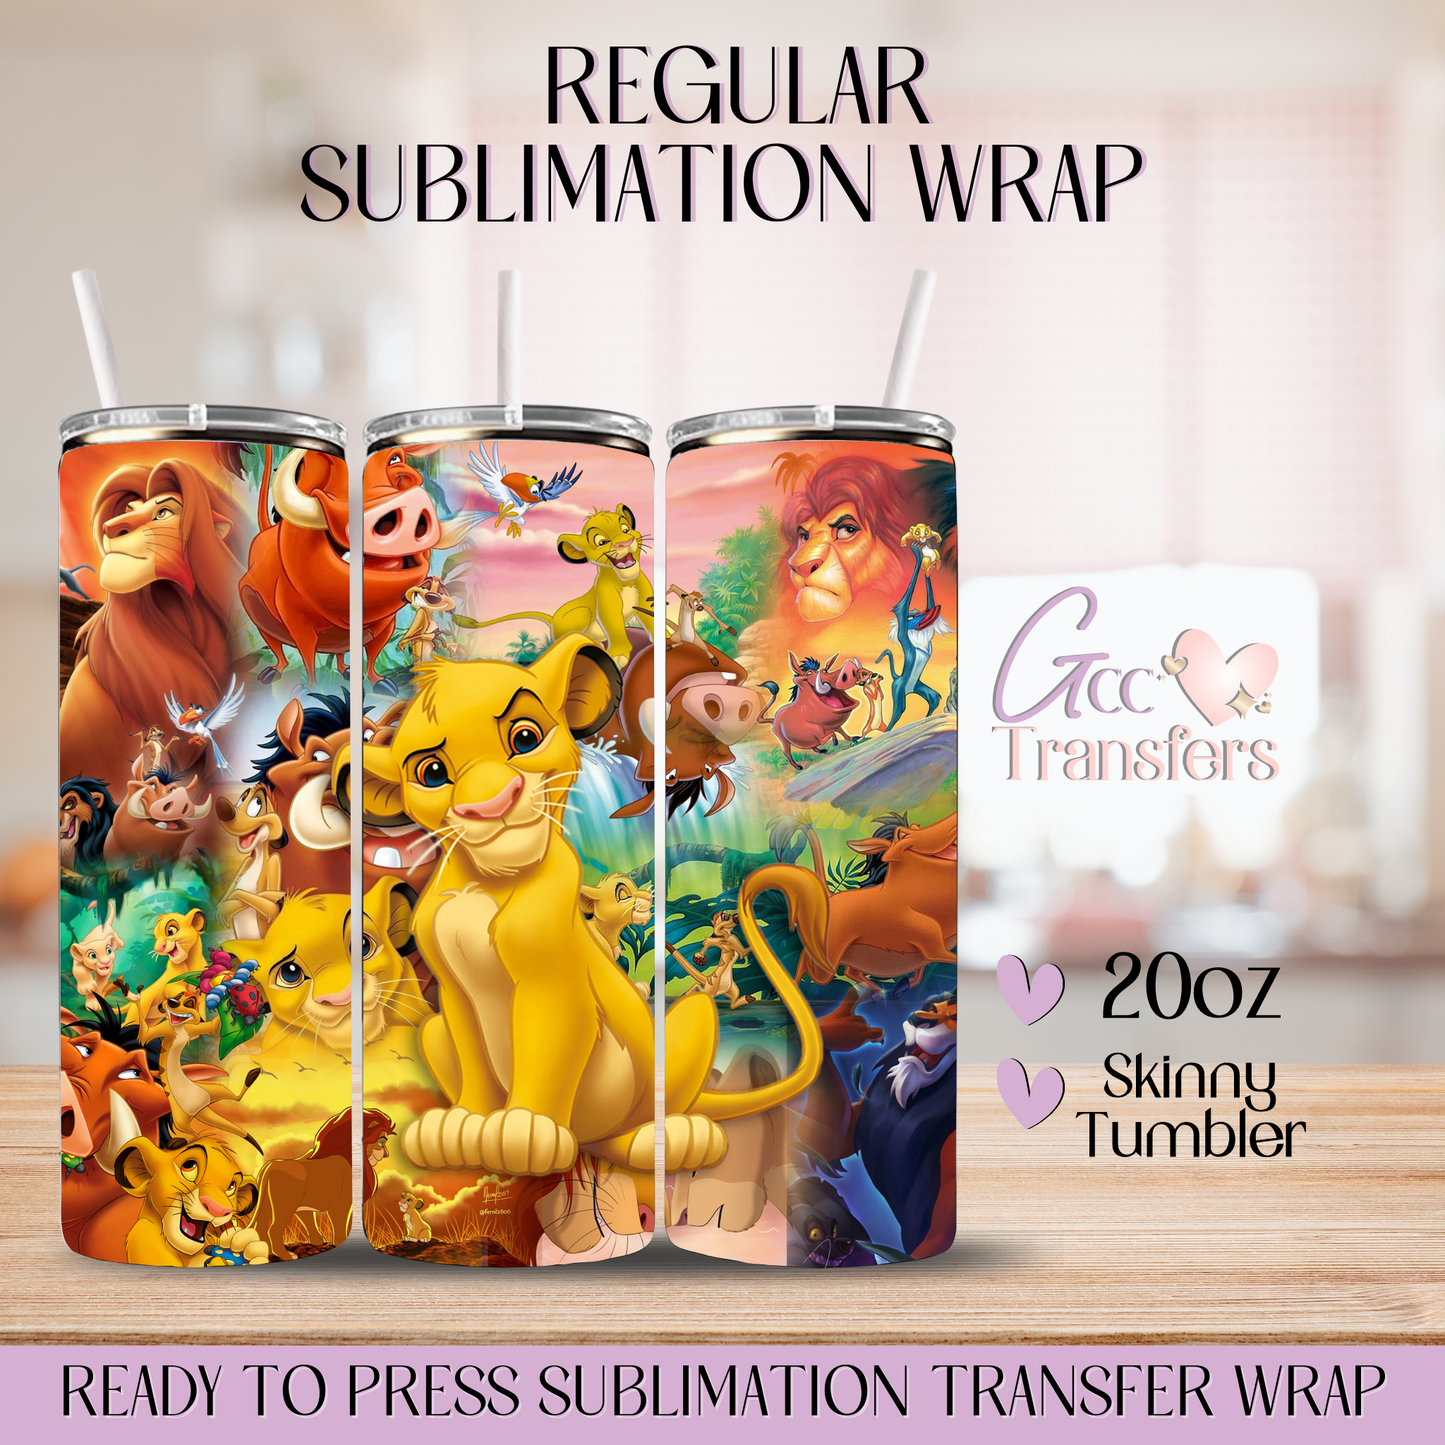 Baby Lion King - 20oz Regular Sublimation Wrap